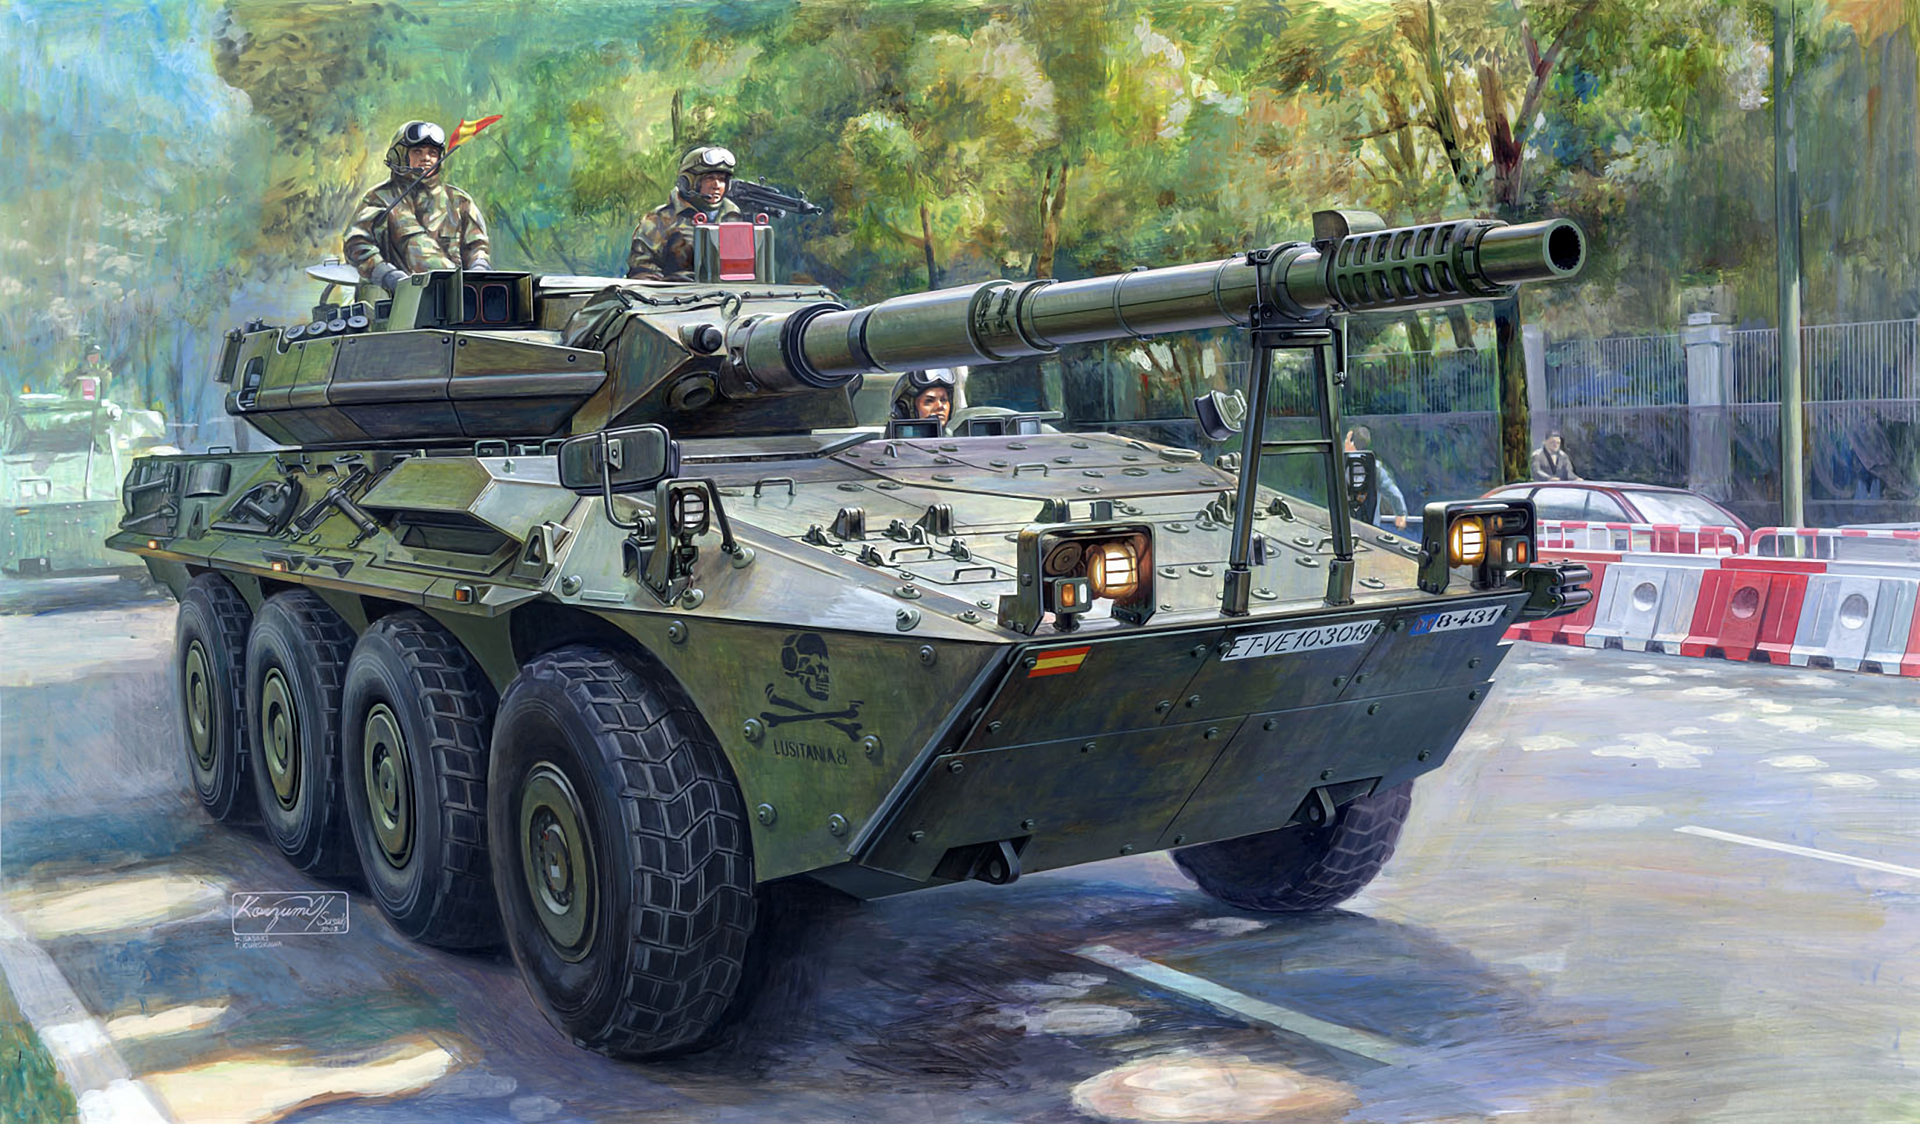 General 1920x1124 tank army military military vehicle artwork soldier helmet flag road trees